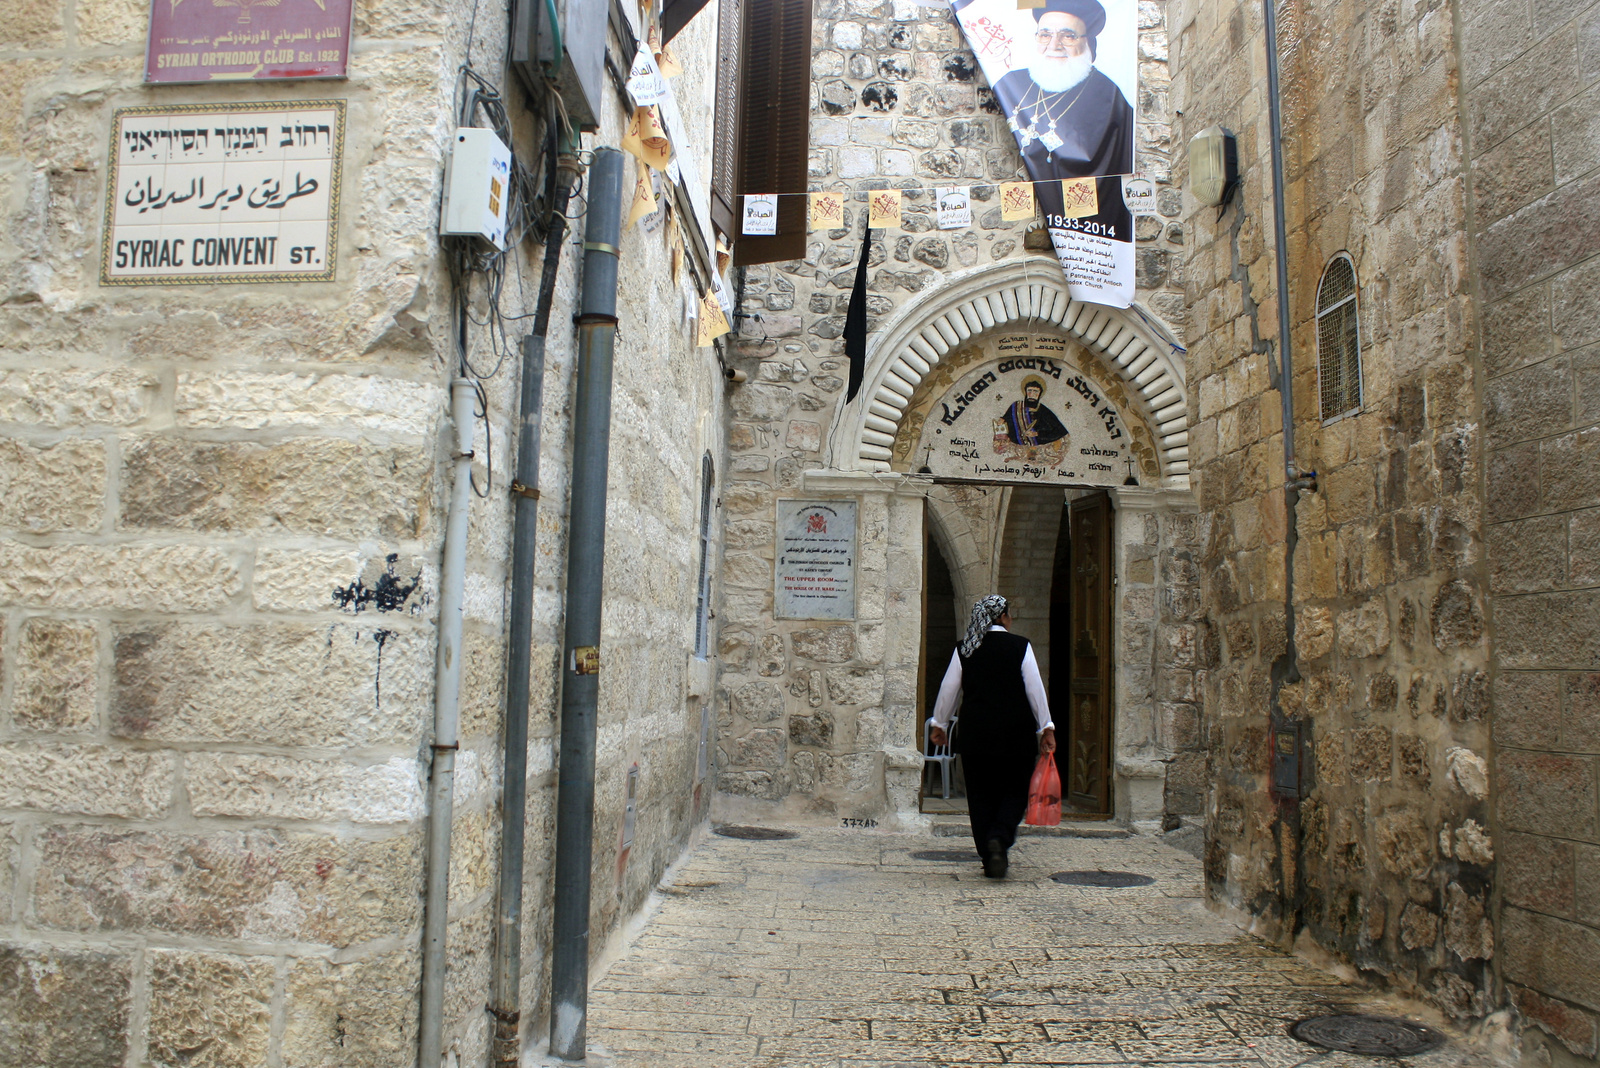 Syriac convent